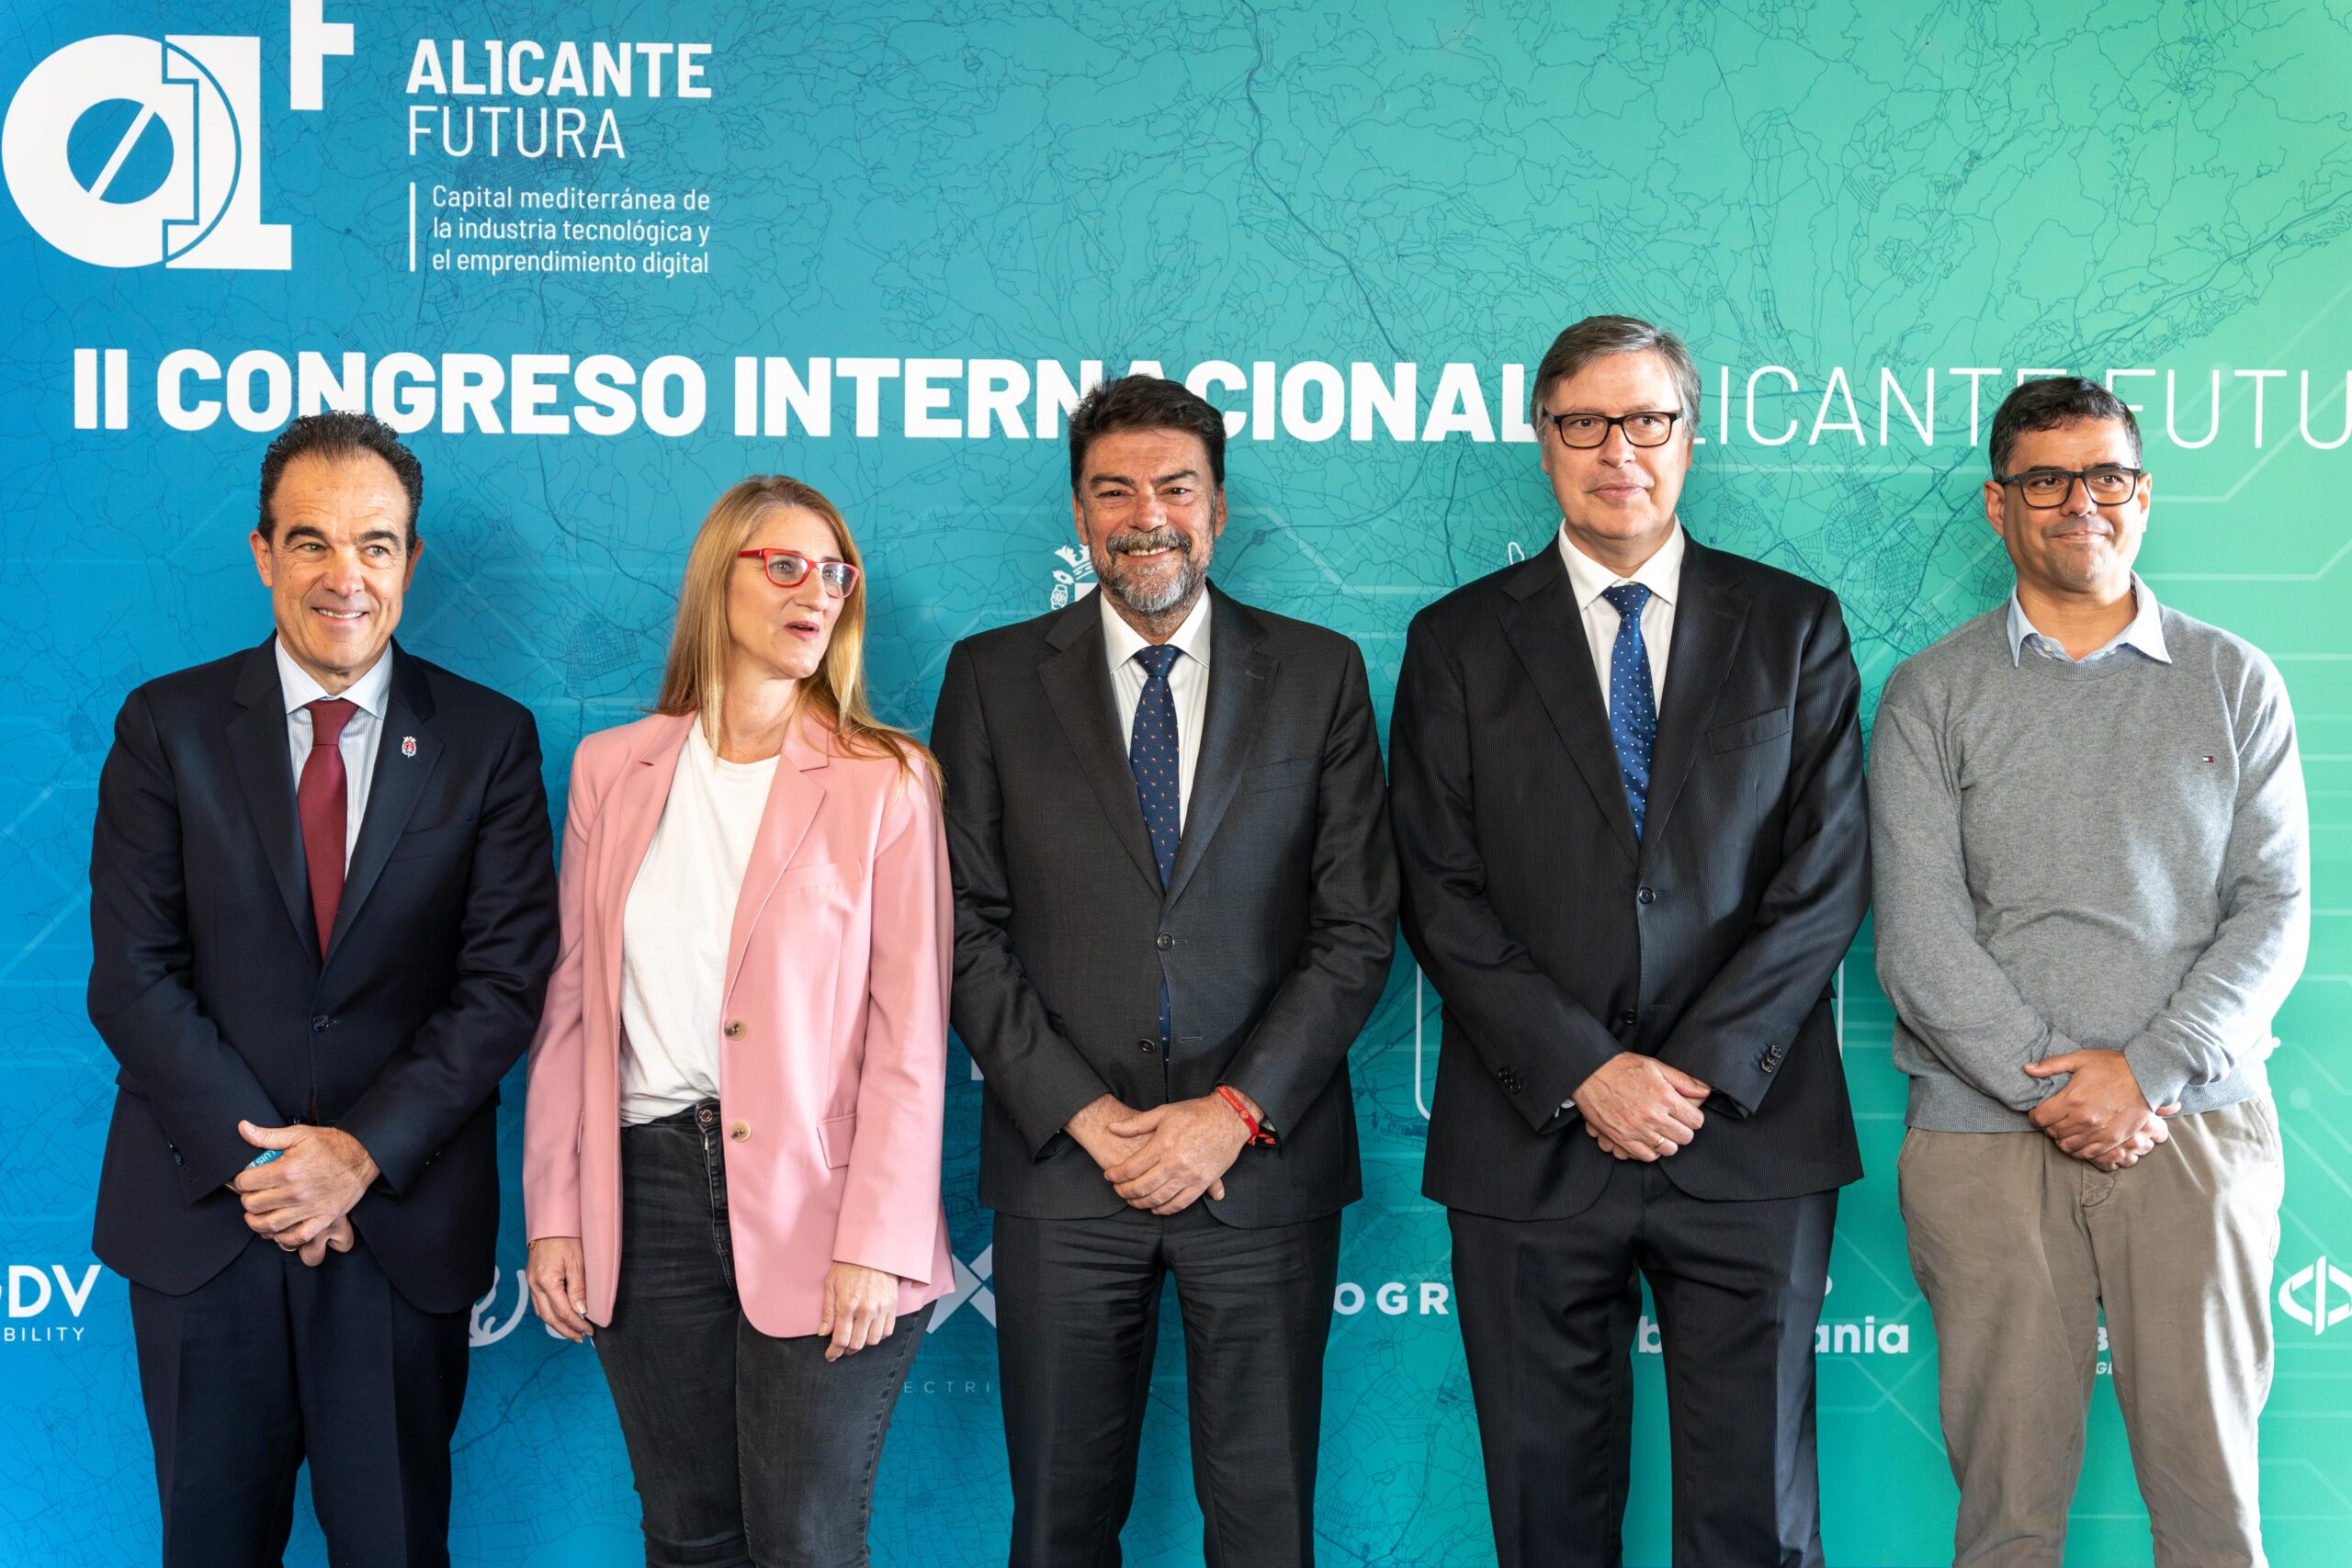 II Congreso Internacional Alicante Futura